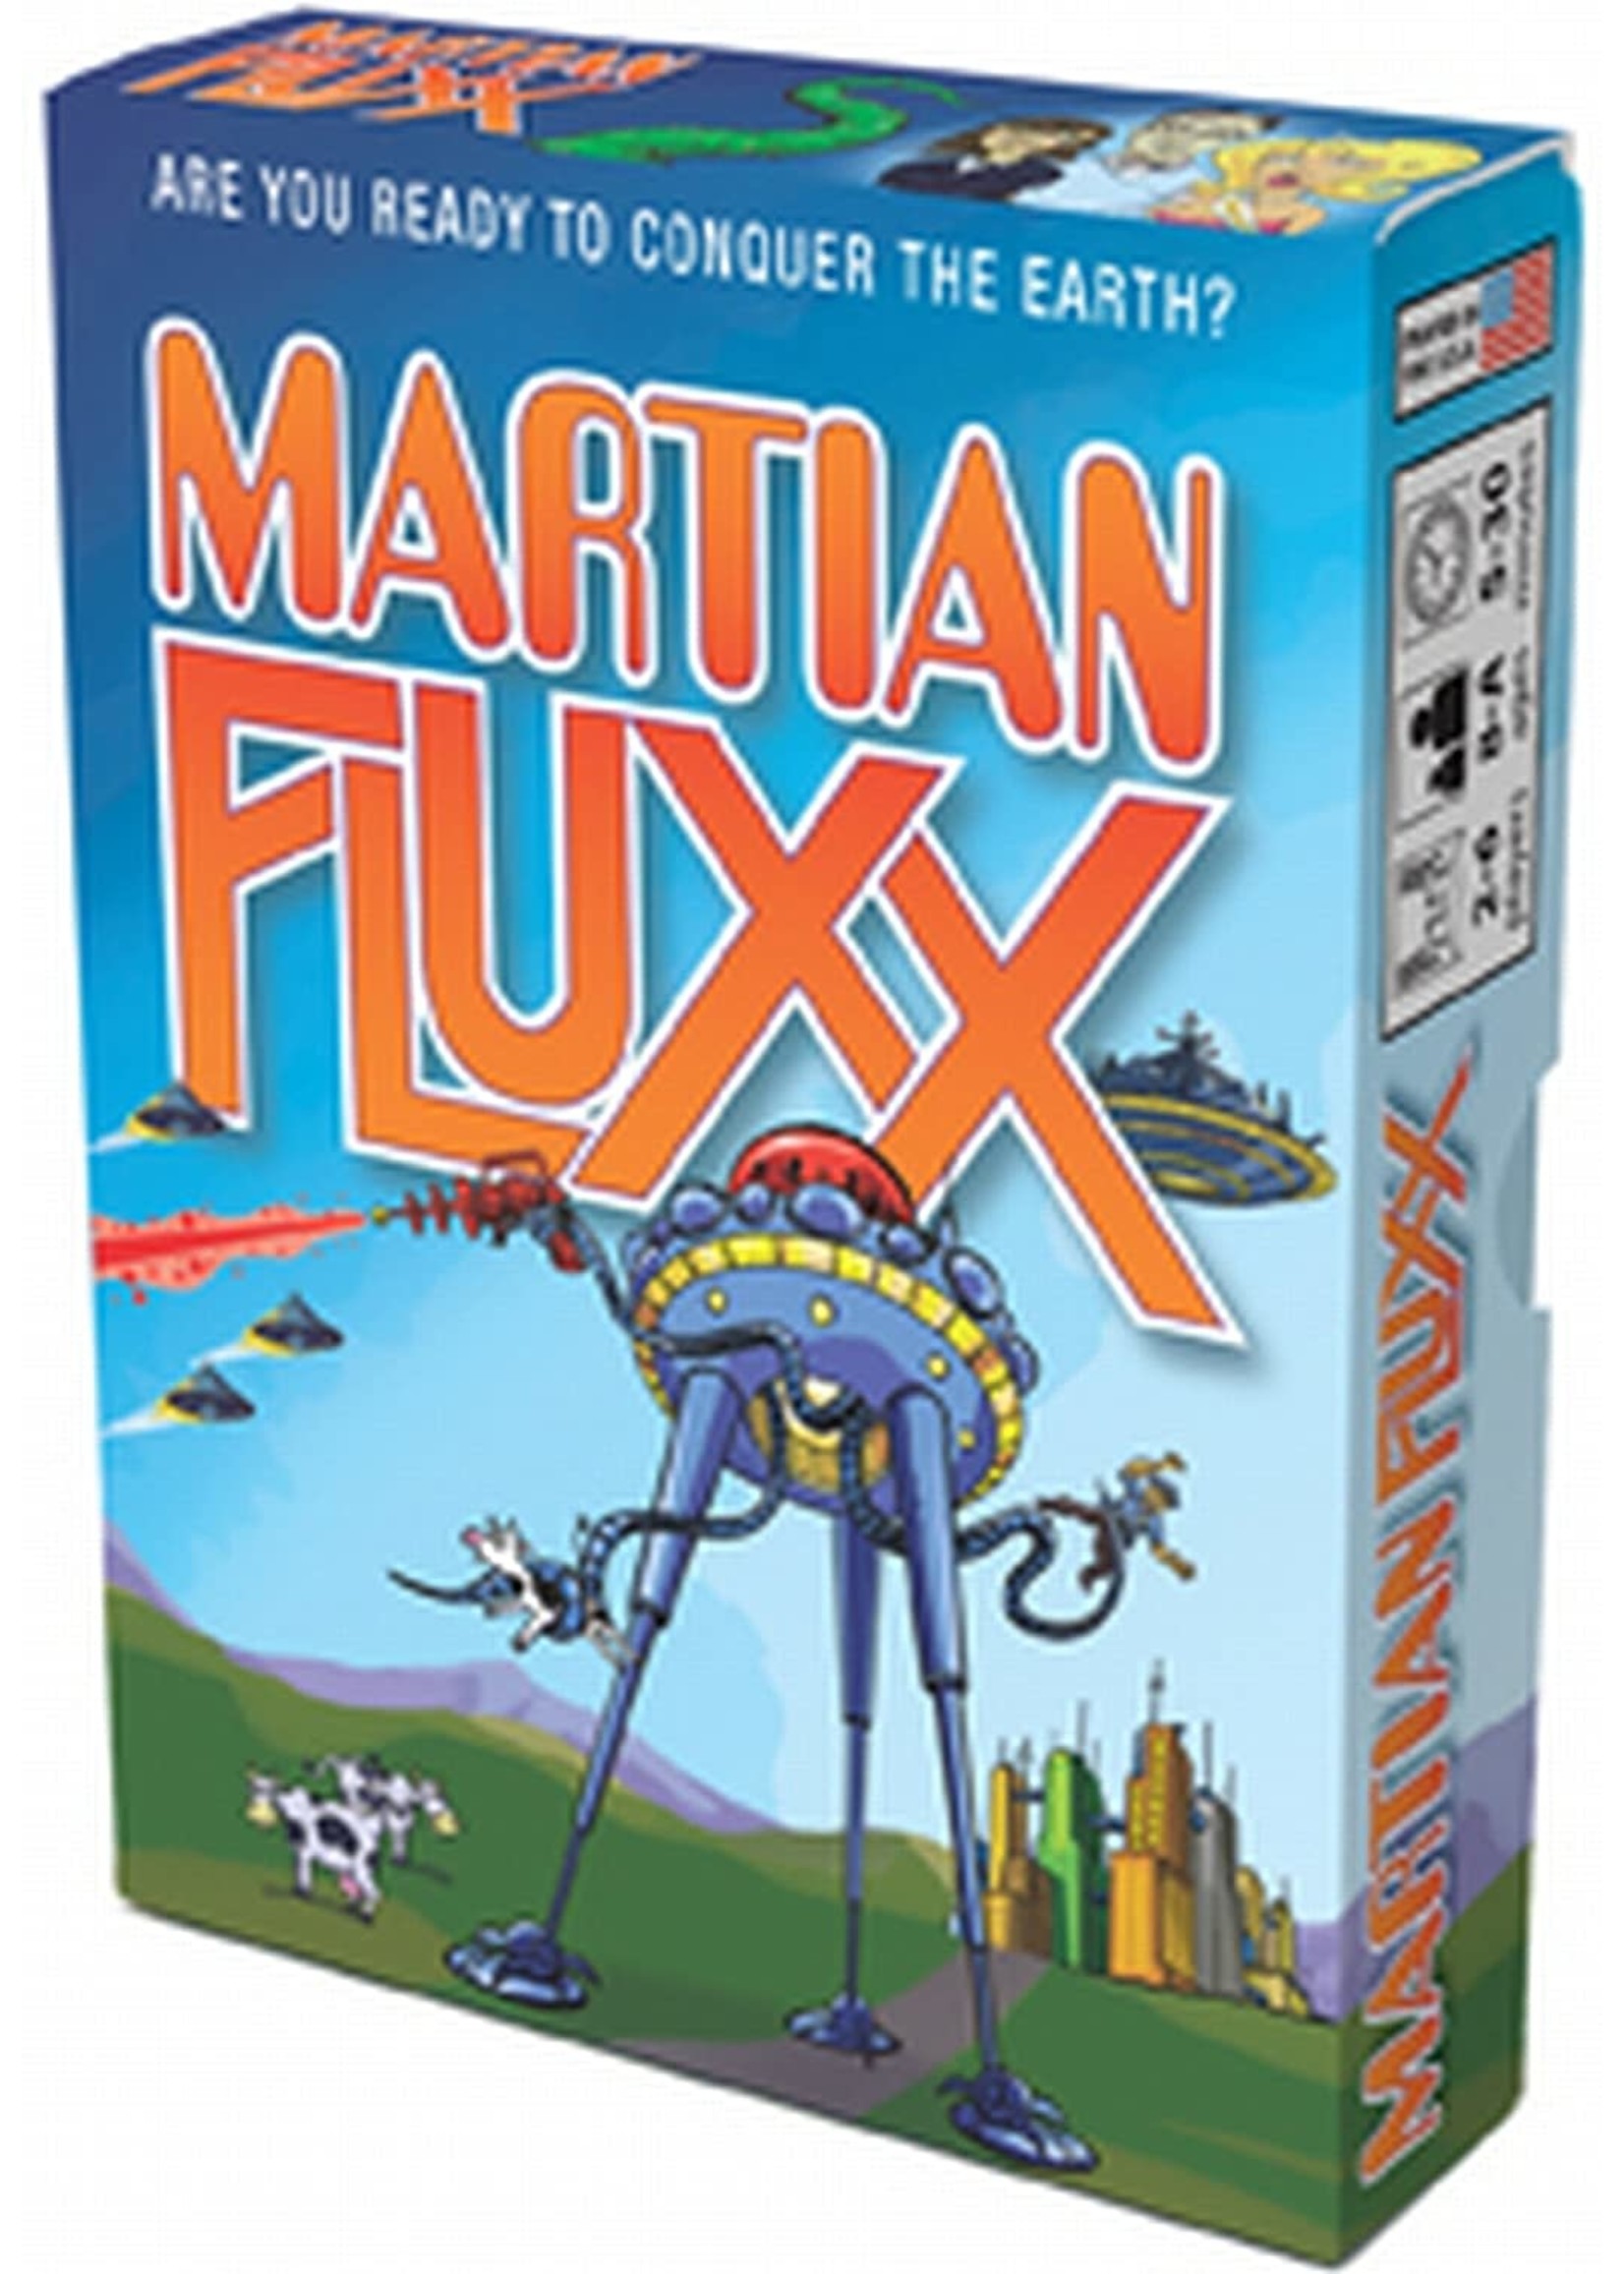 RENTAL - Martian Fluxx 6.8 oz